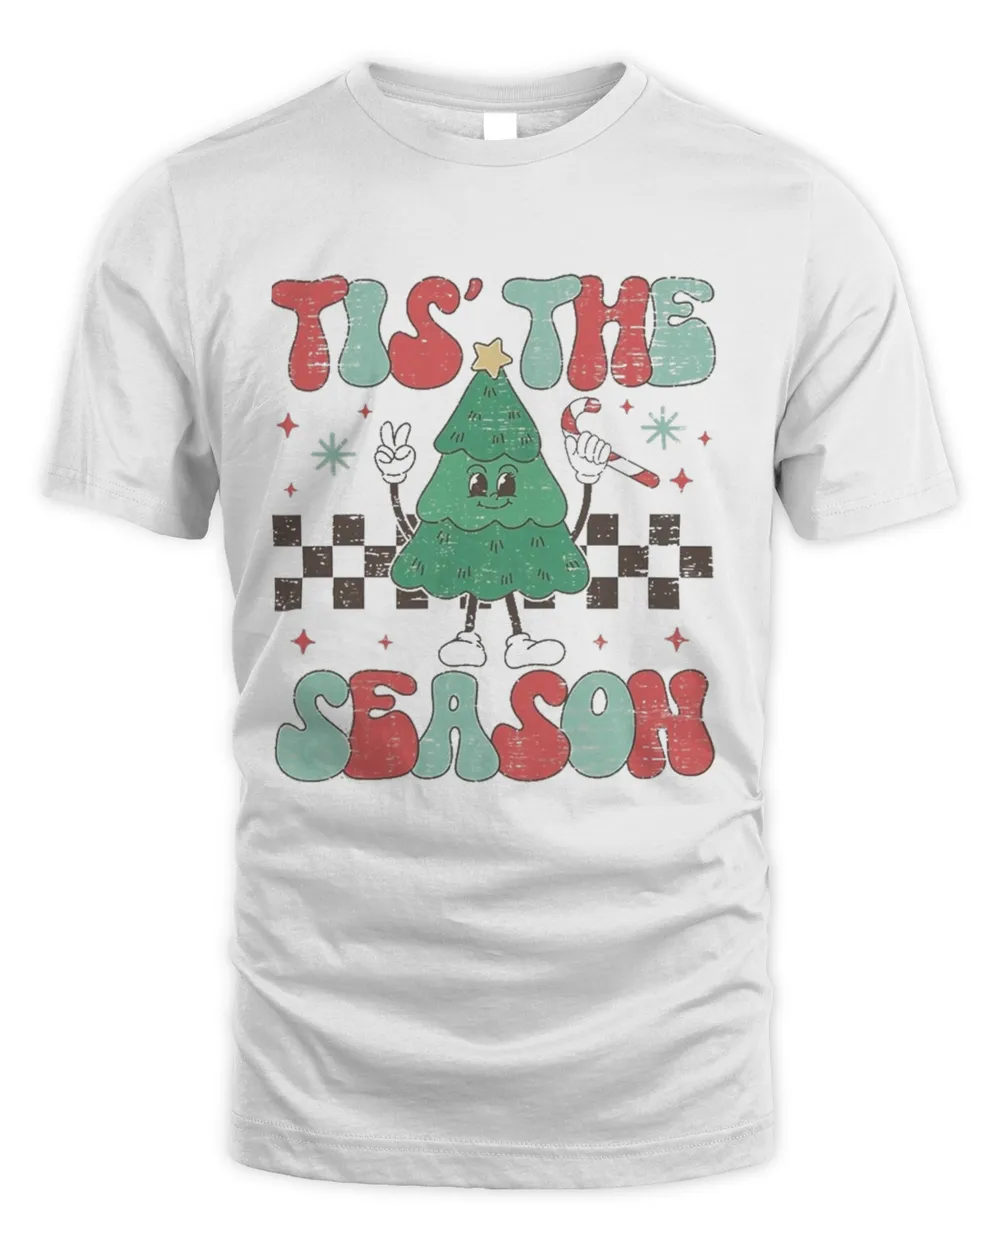 Tis The Season Christmas T-Shirt